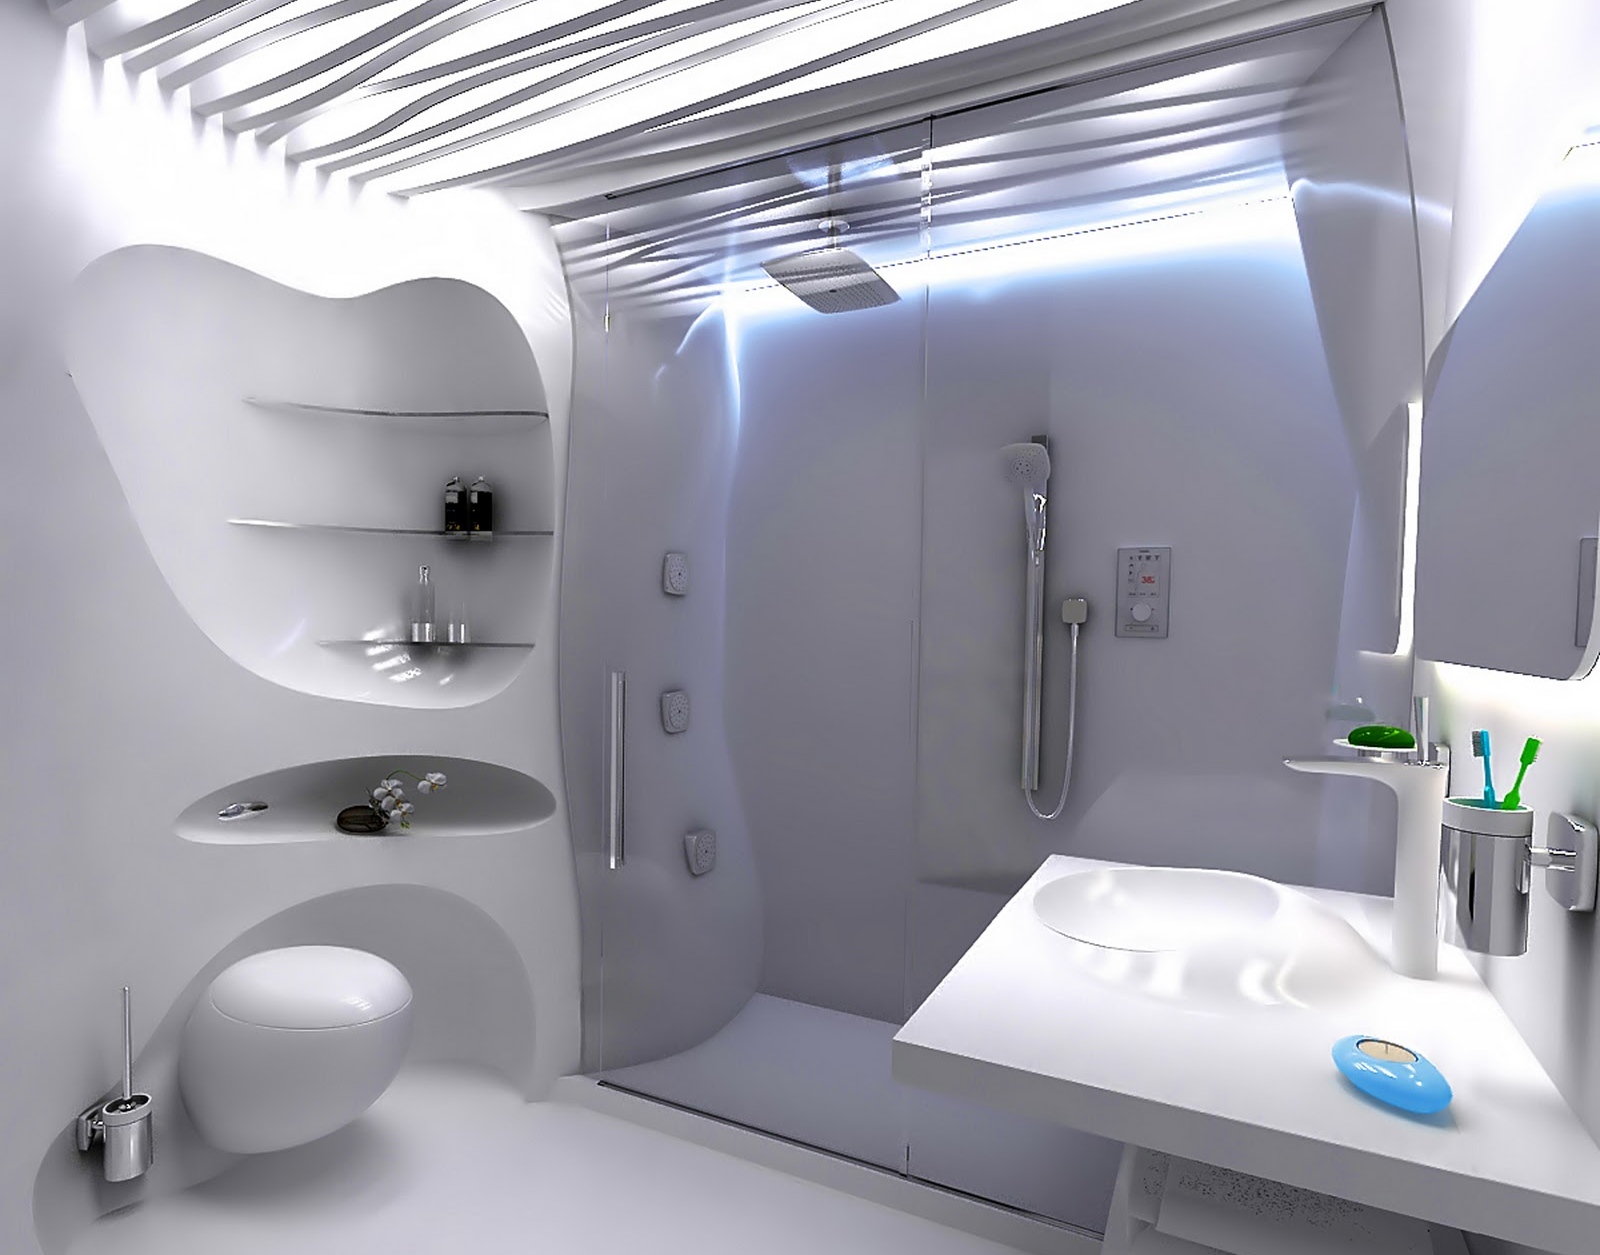 unreal bionic style bathroom interior